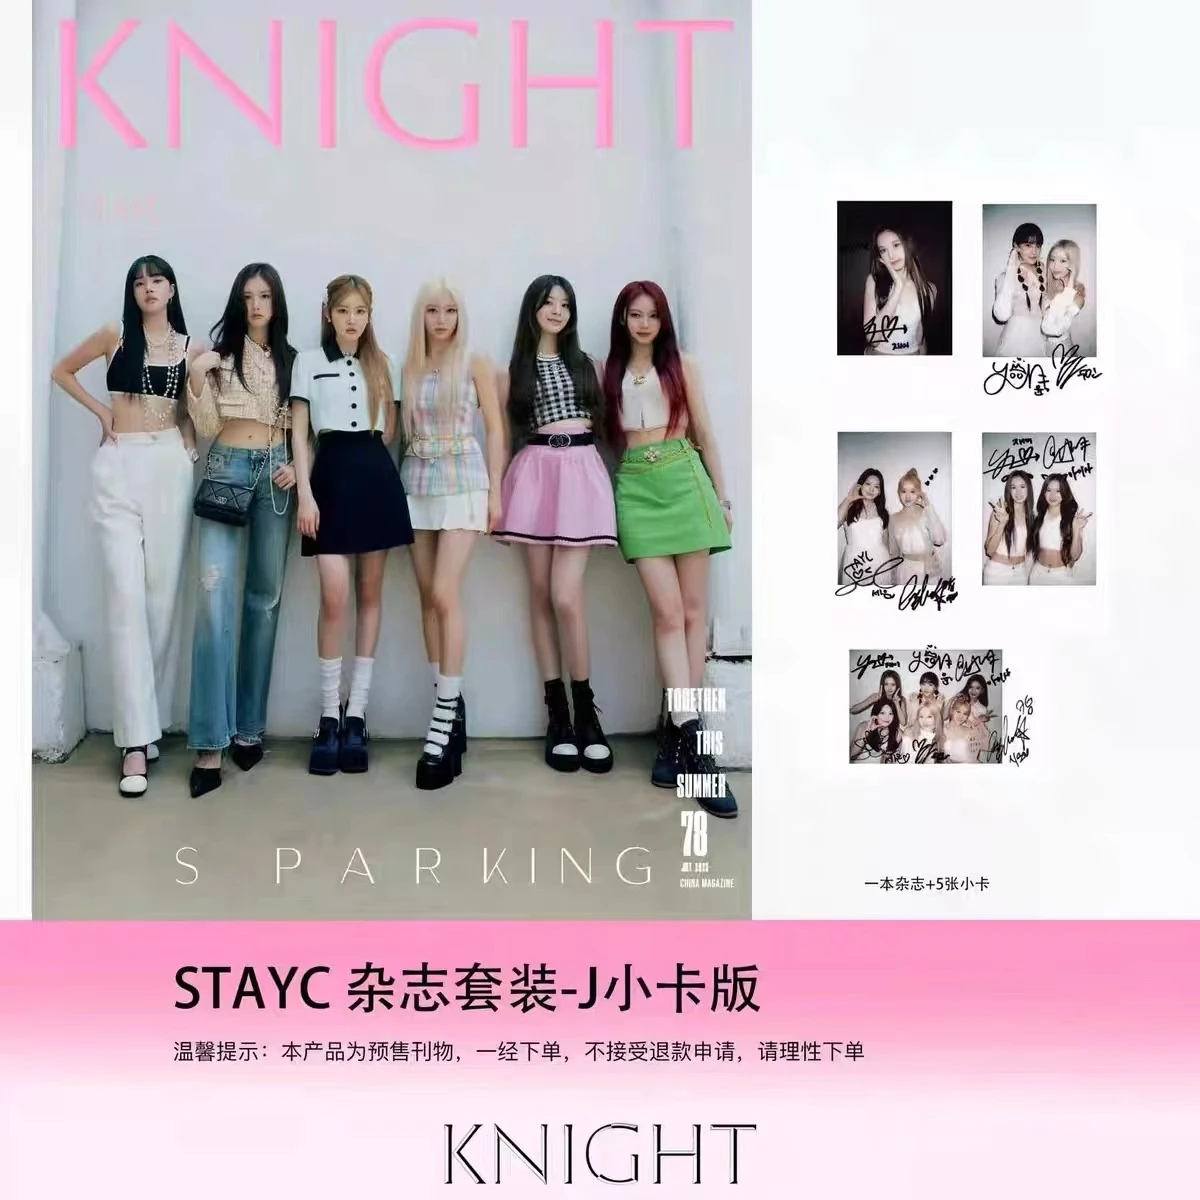 

Korean Singer Kpop Sumin Sieun Isa Yoon J Seeun Girl Group Print Knight Magazine Poster Card Fans Gift